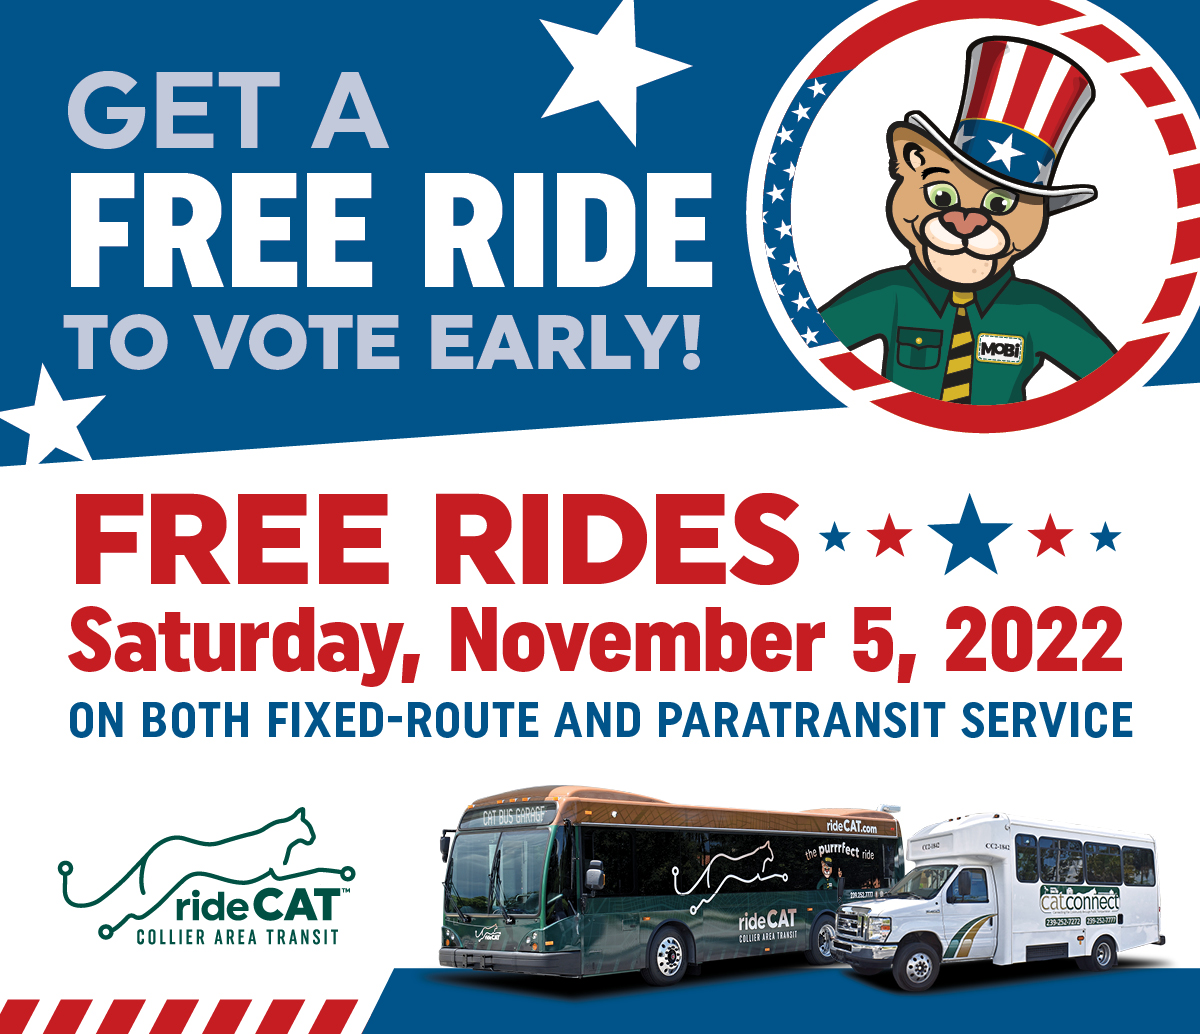 FREE RIDES to vote on Saturday, November 5, 2022